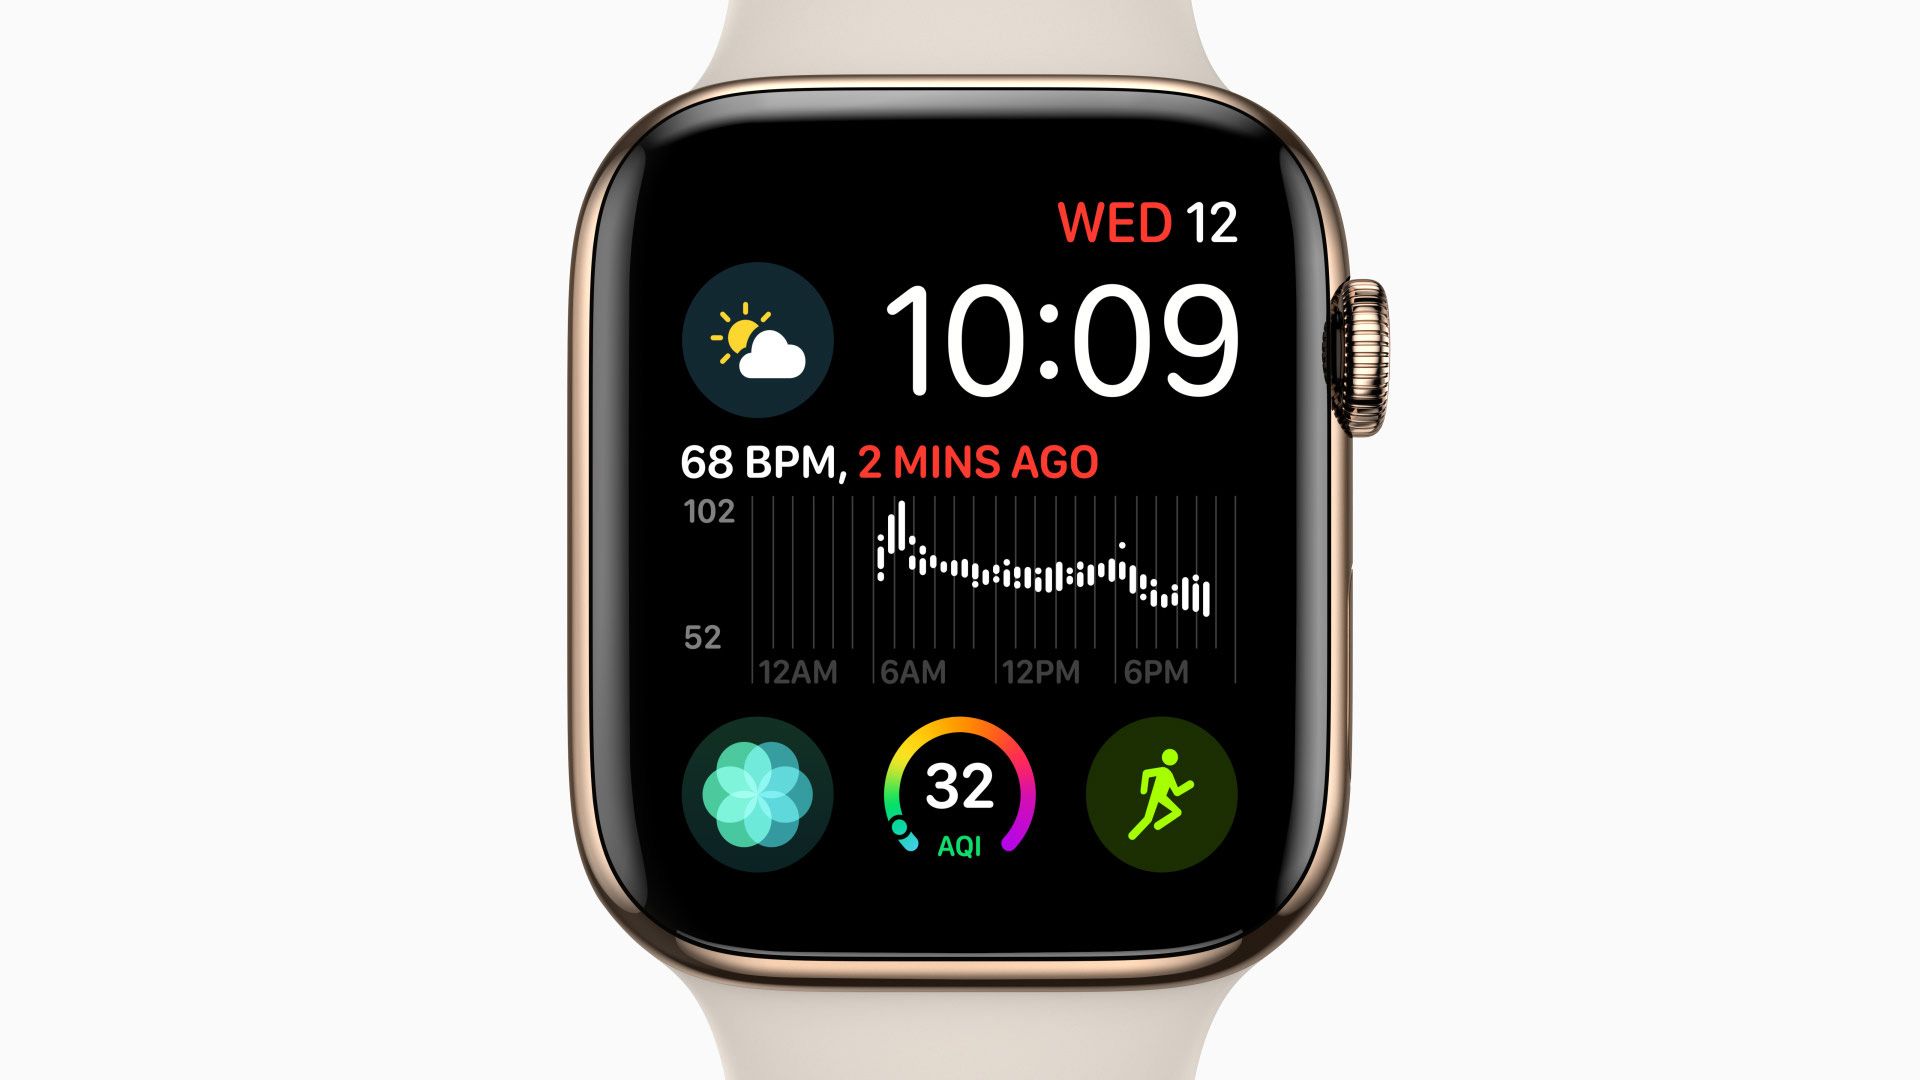 Apple Watch Series 4, Gold, Apple September 2018 Event - Apple Watch Price In Nepal 2019 - HD Wallpaper 